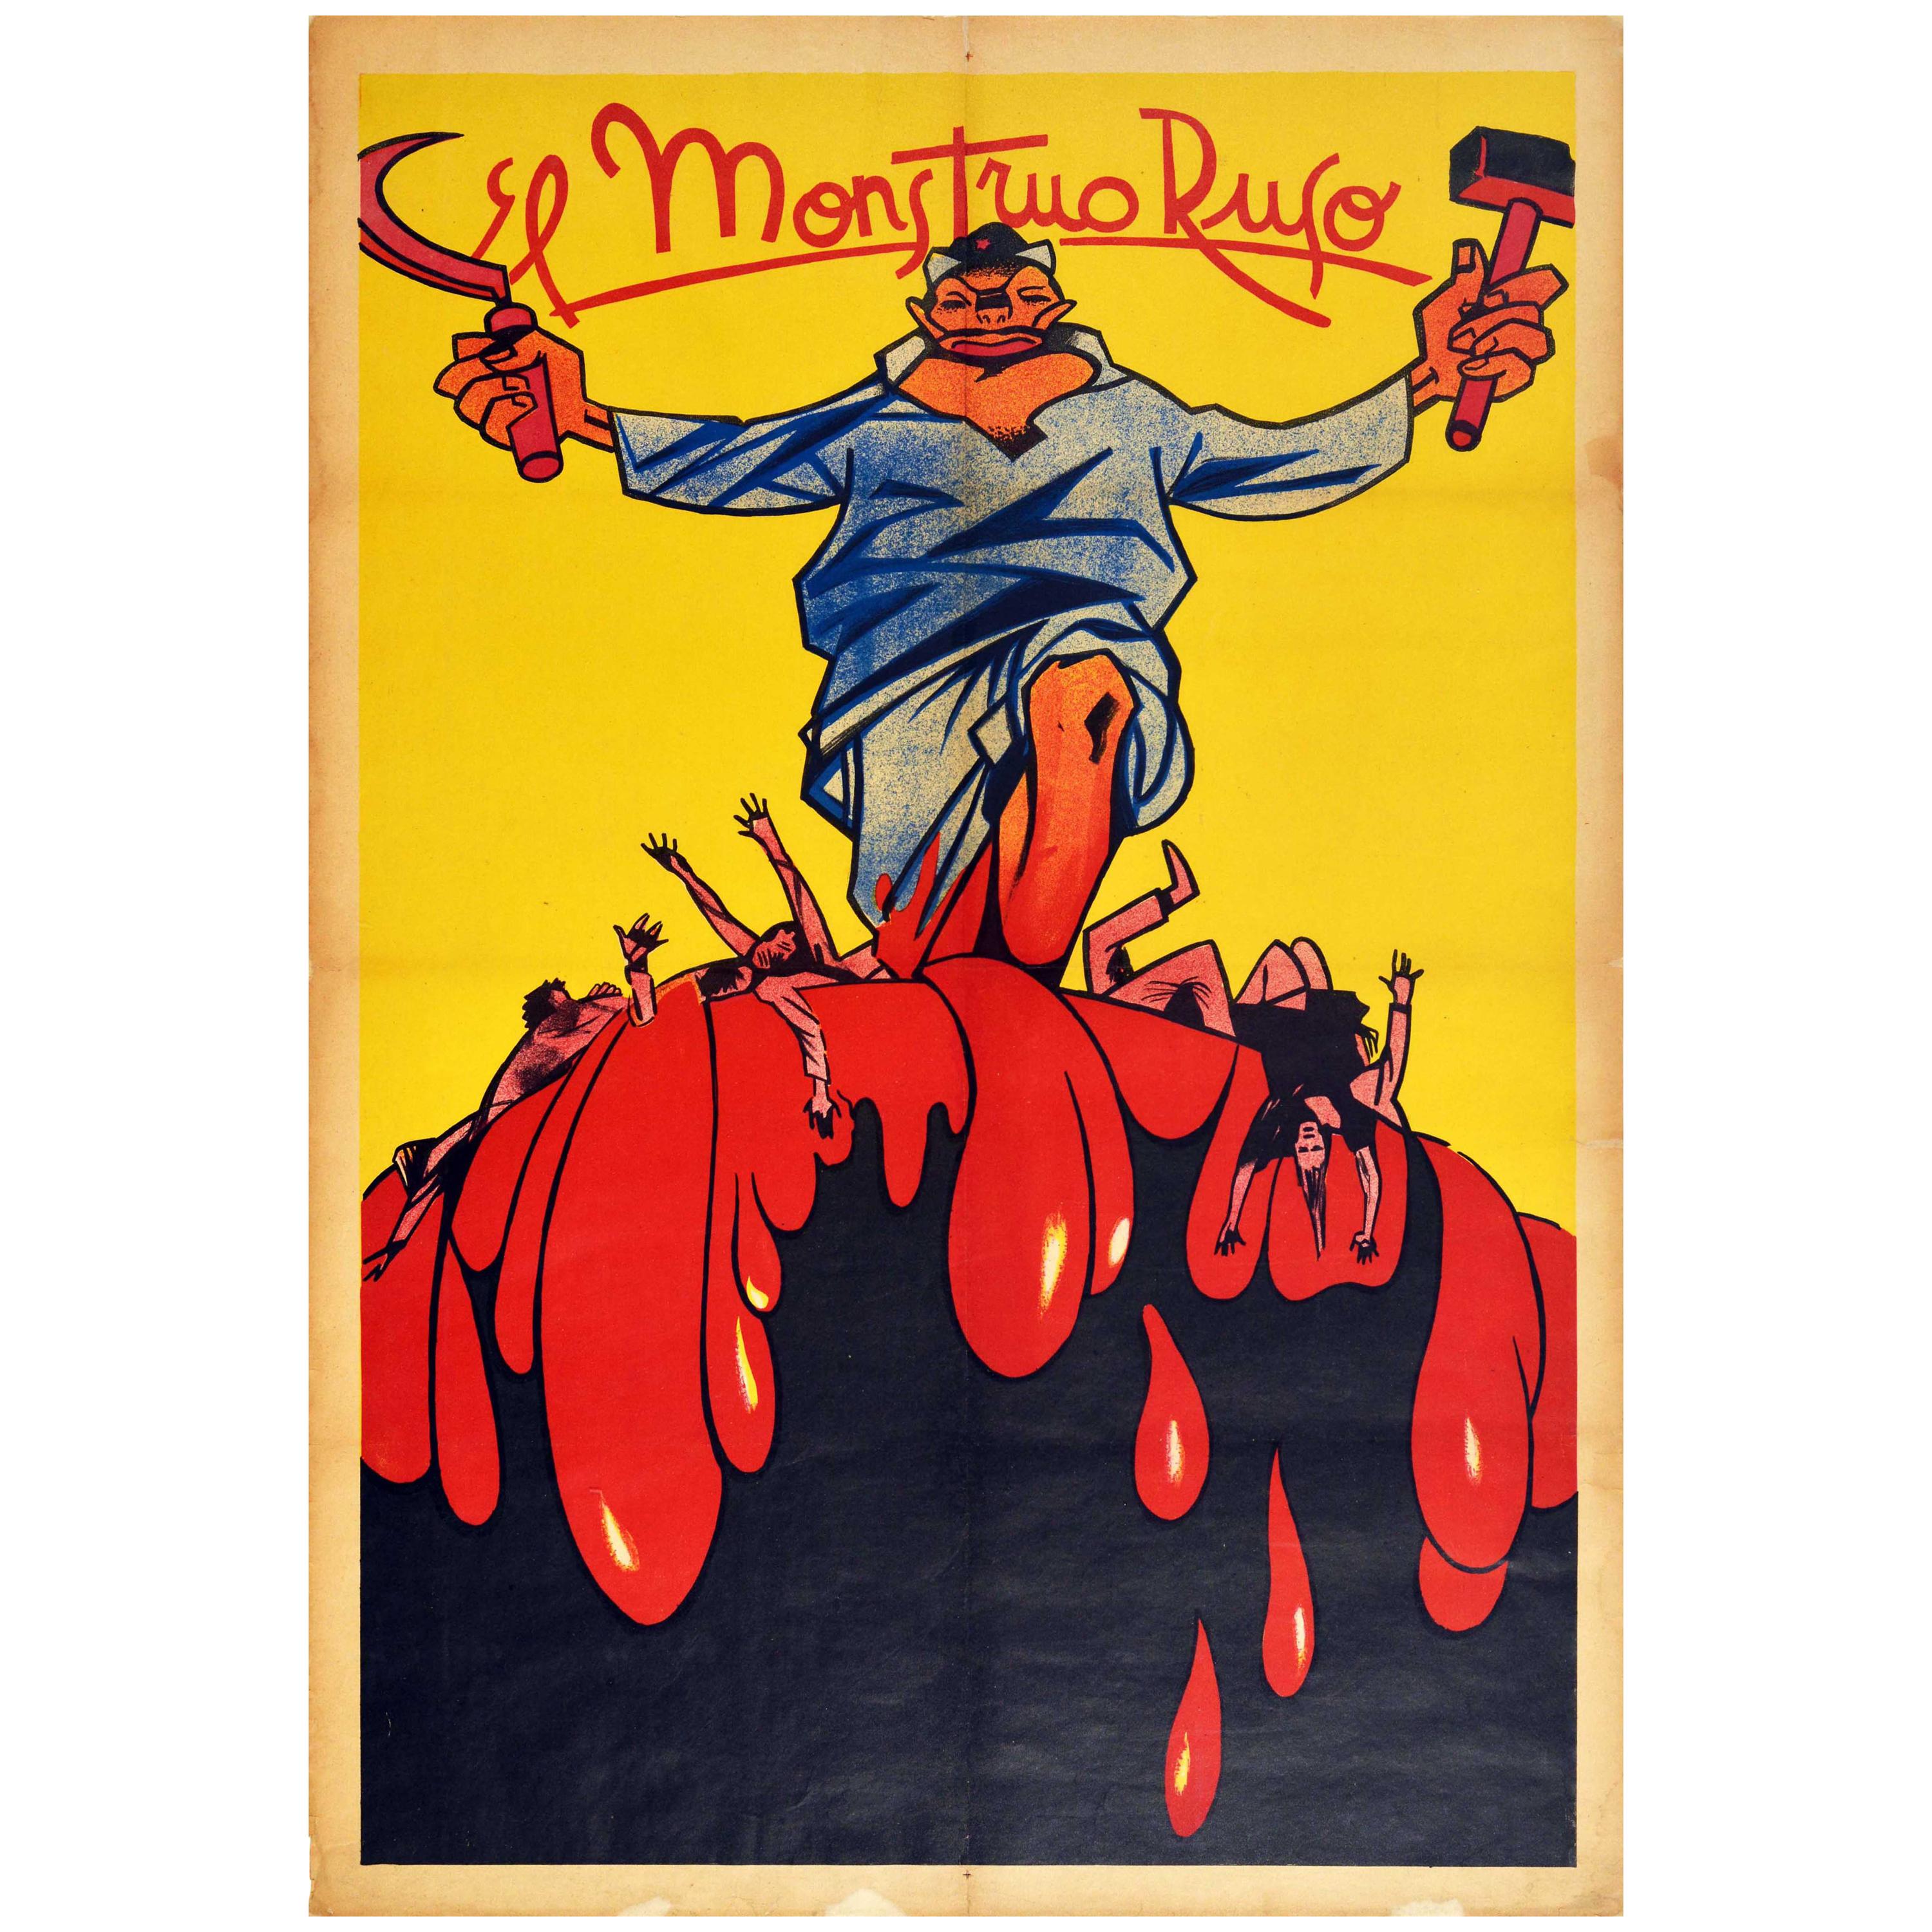 Original Vintage-Poster, Spanisches Bürgerkriegsplakat, El Monstruo Ruso, Das russische Monster